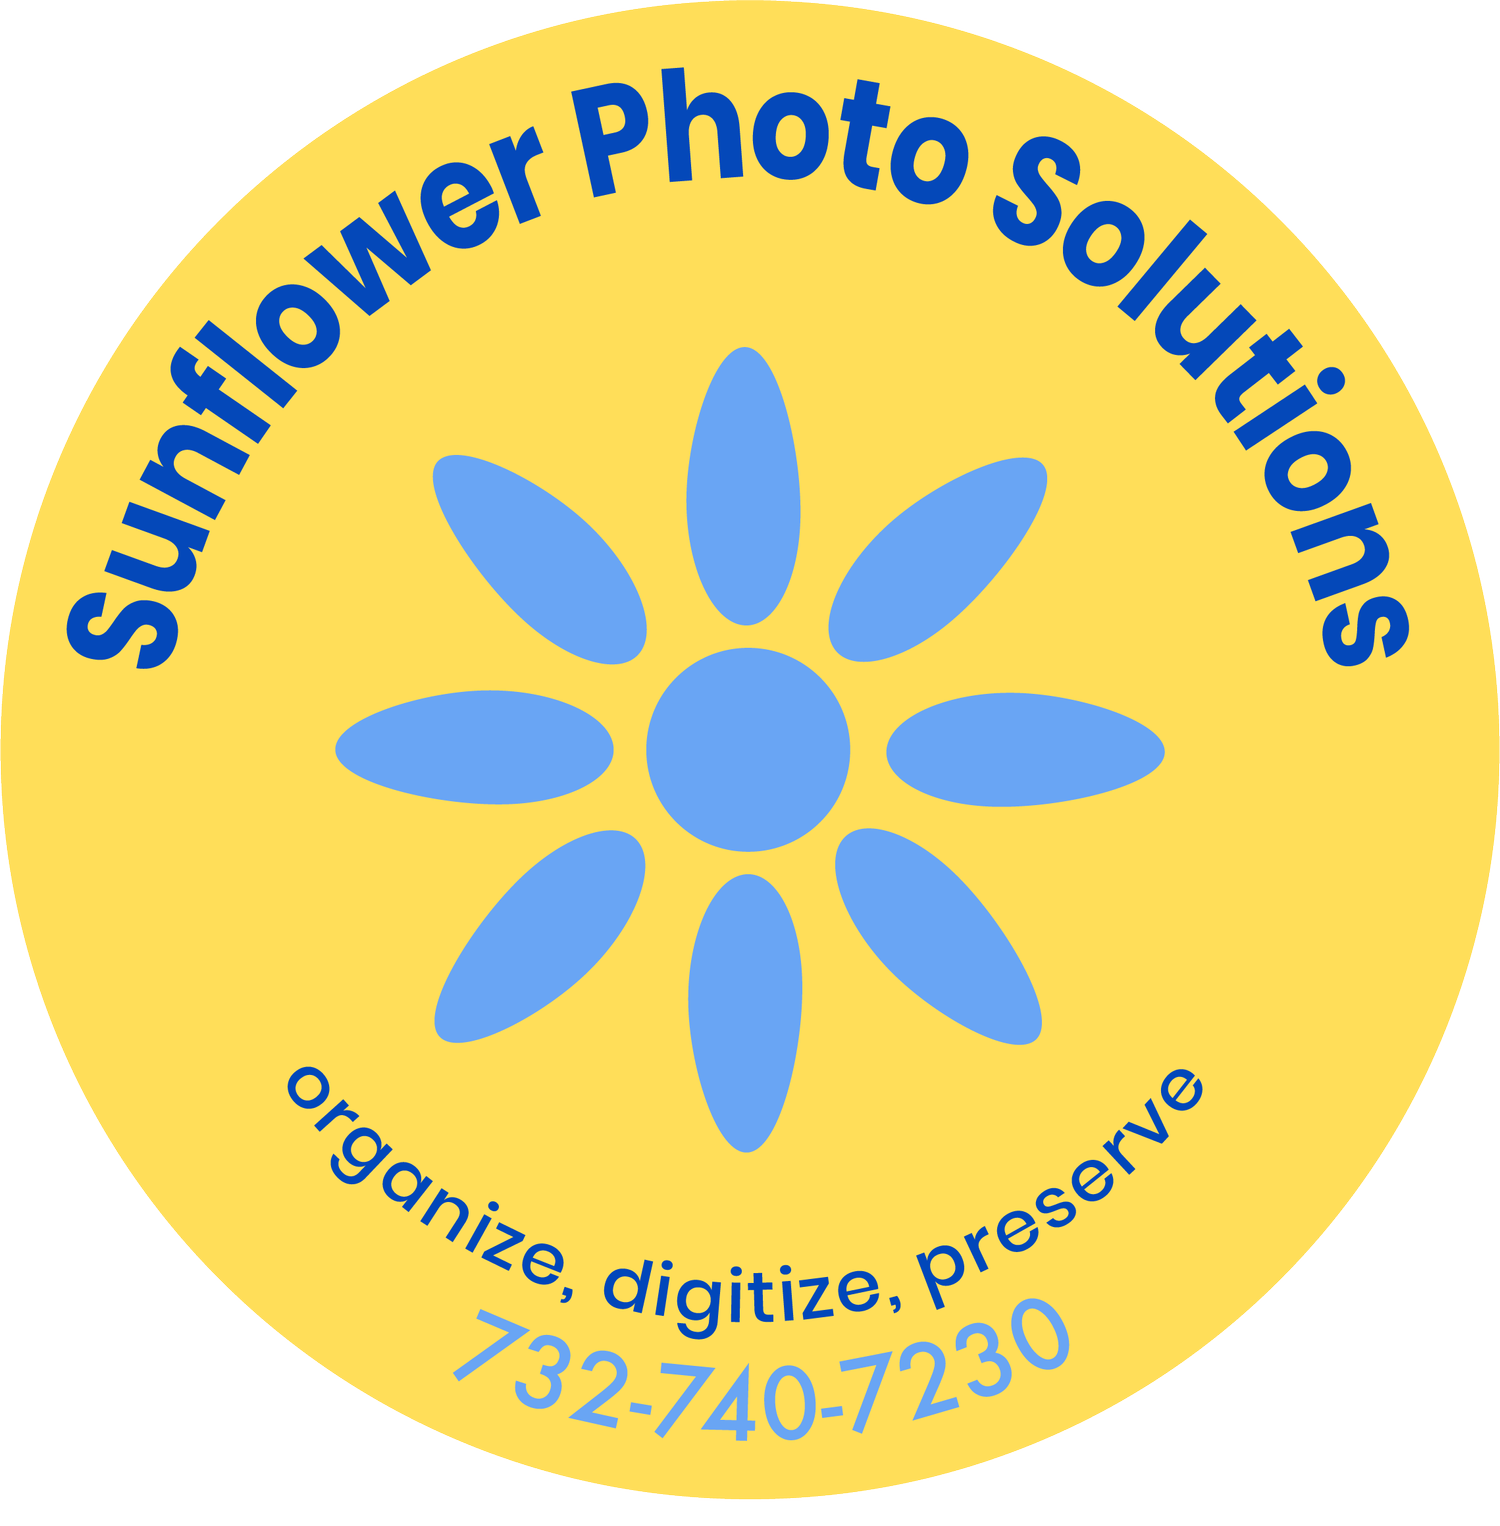 Sunflower Photo Solutions